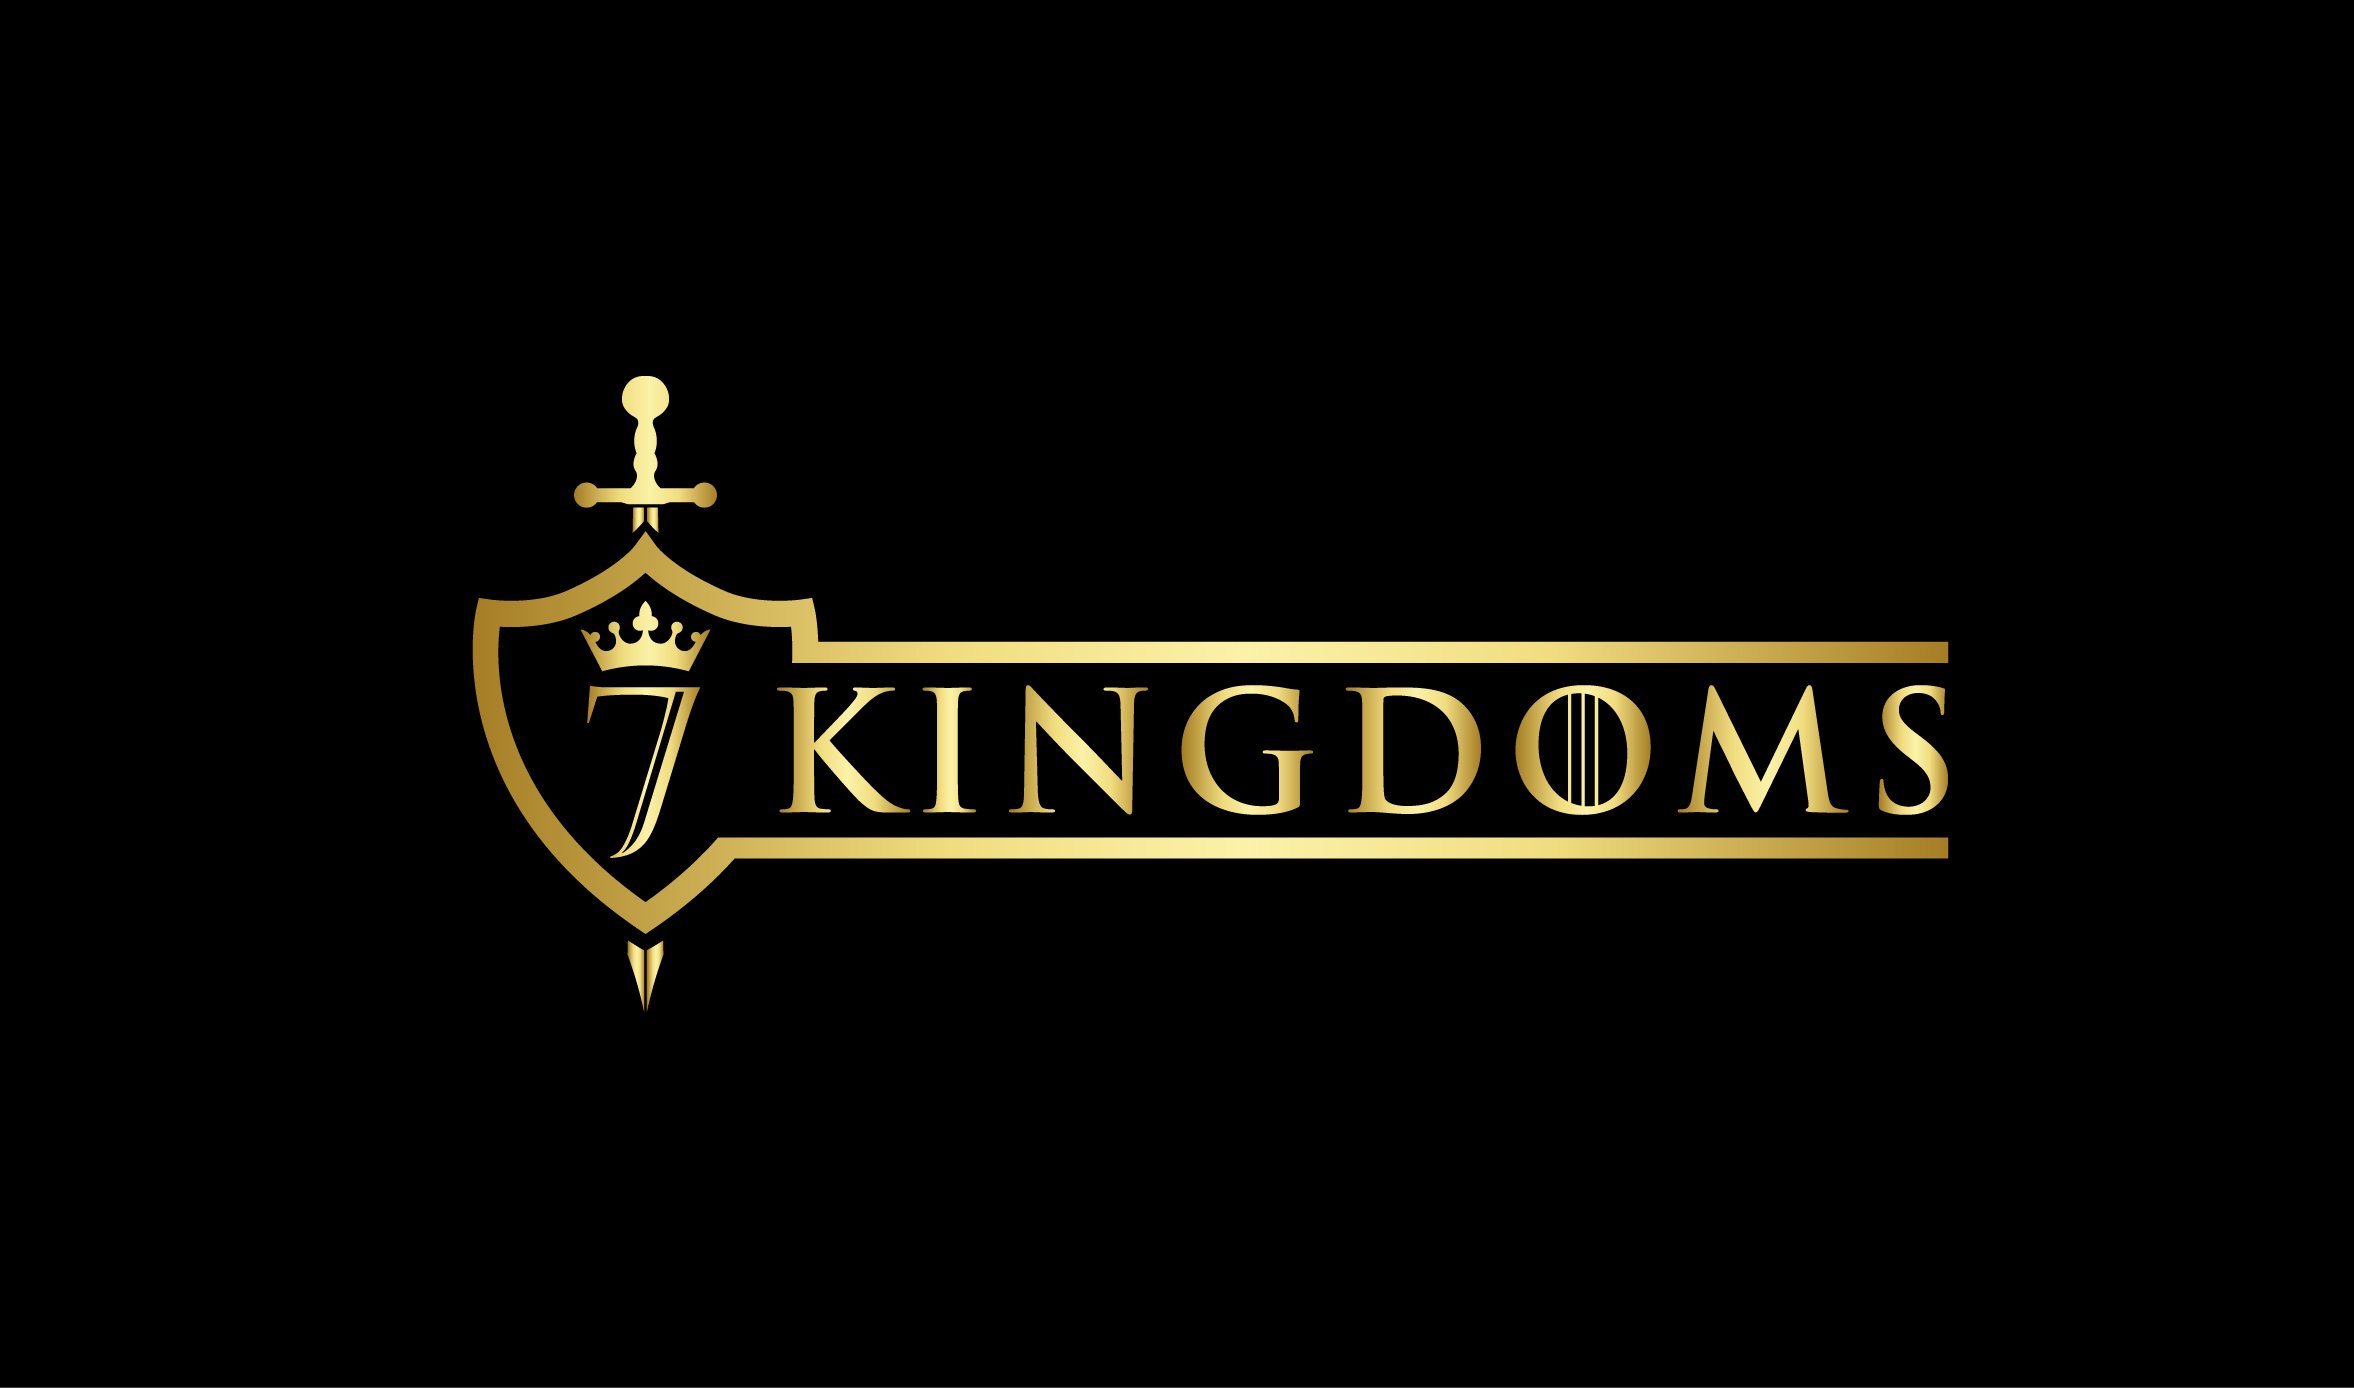 7 kingdoms menu — 7KindomsLounge